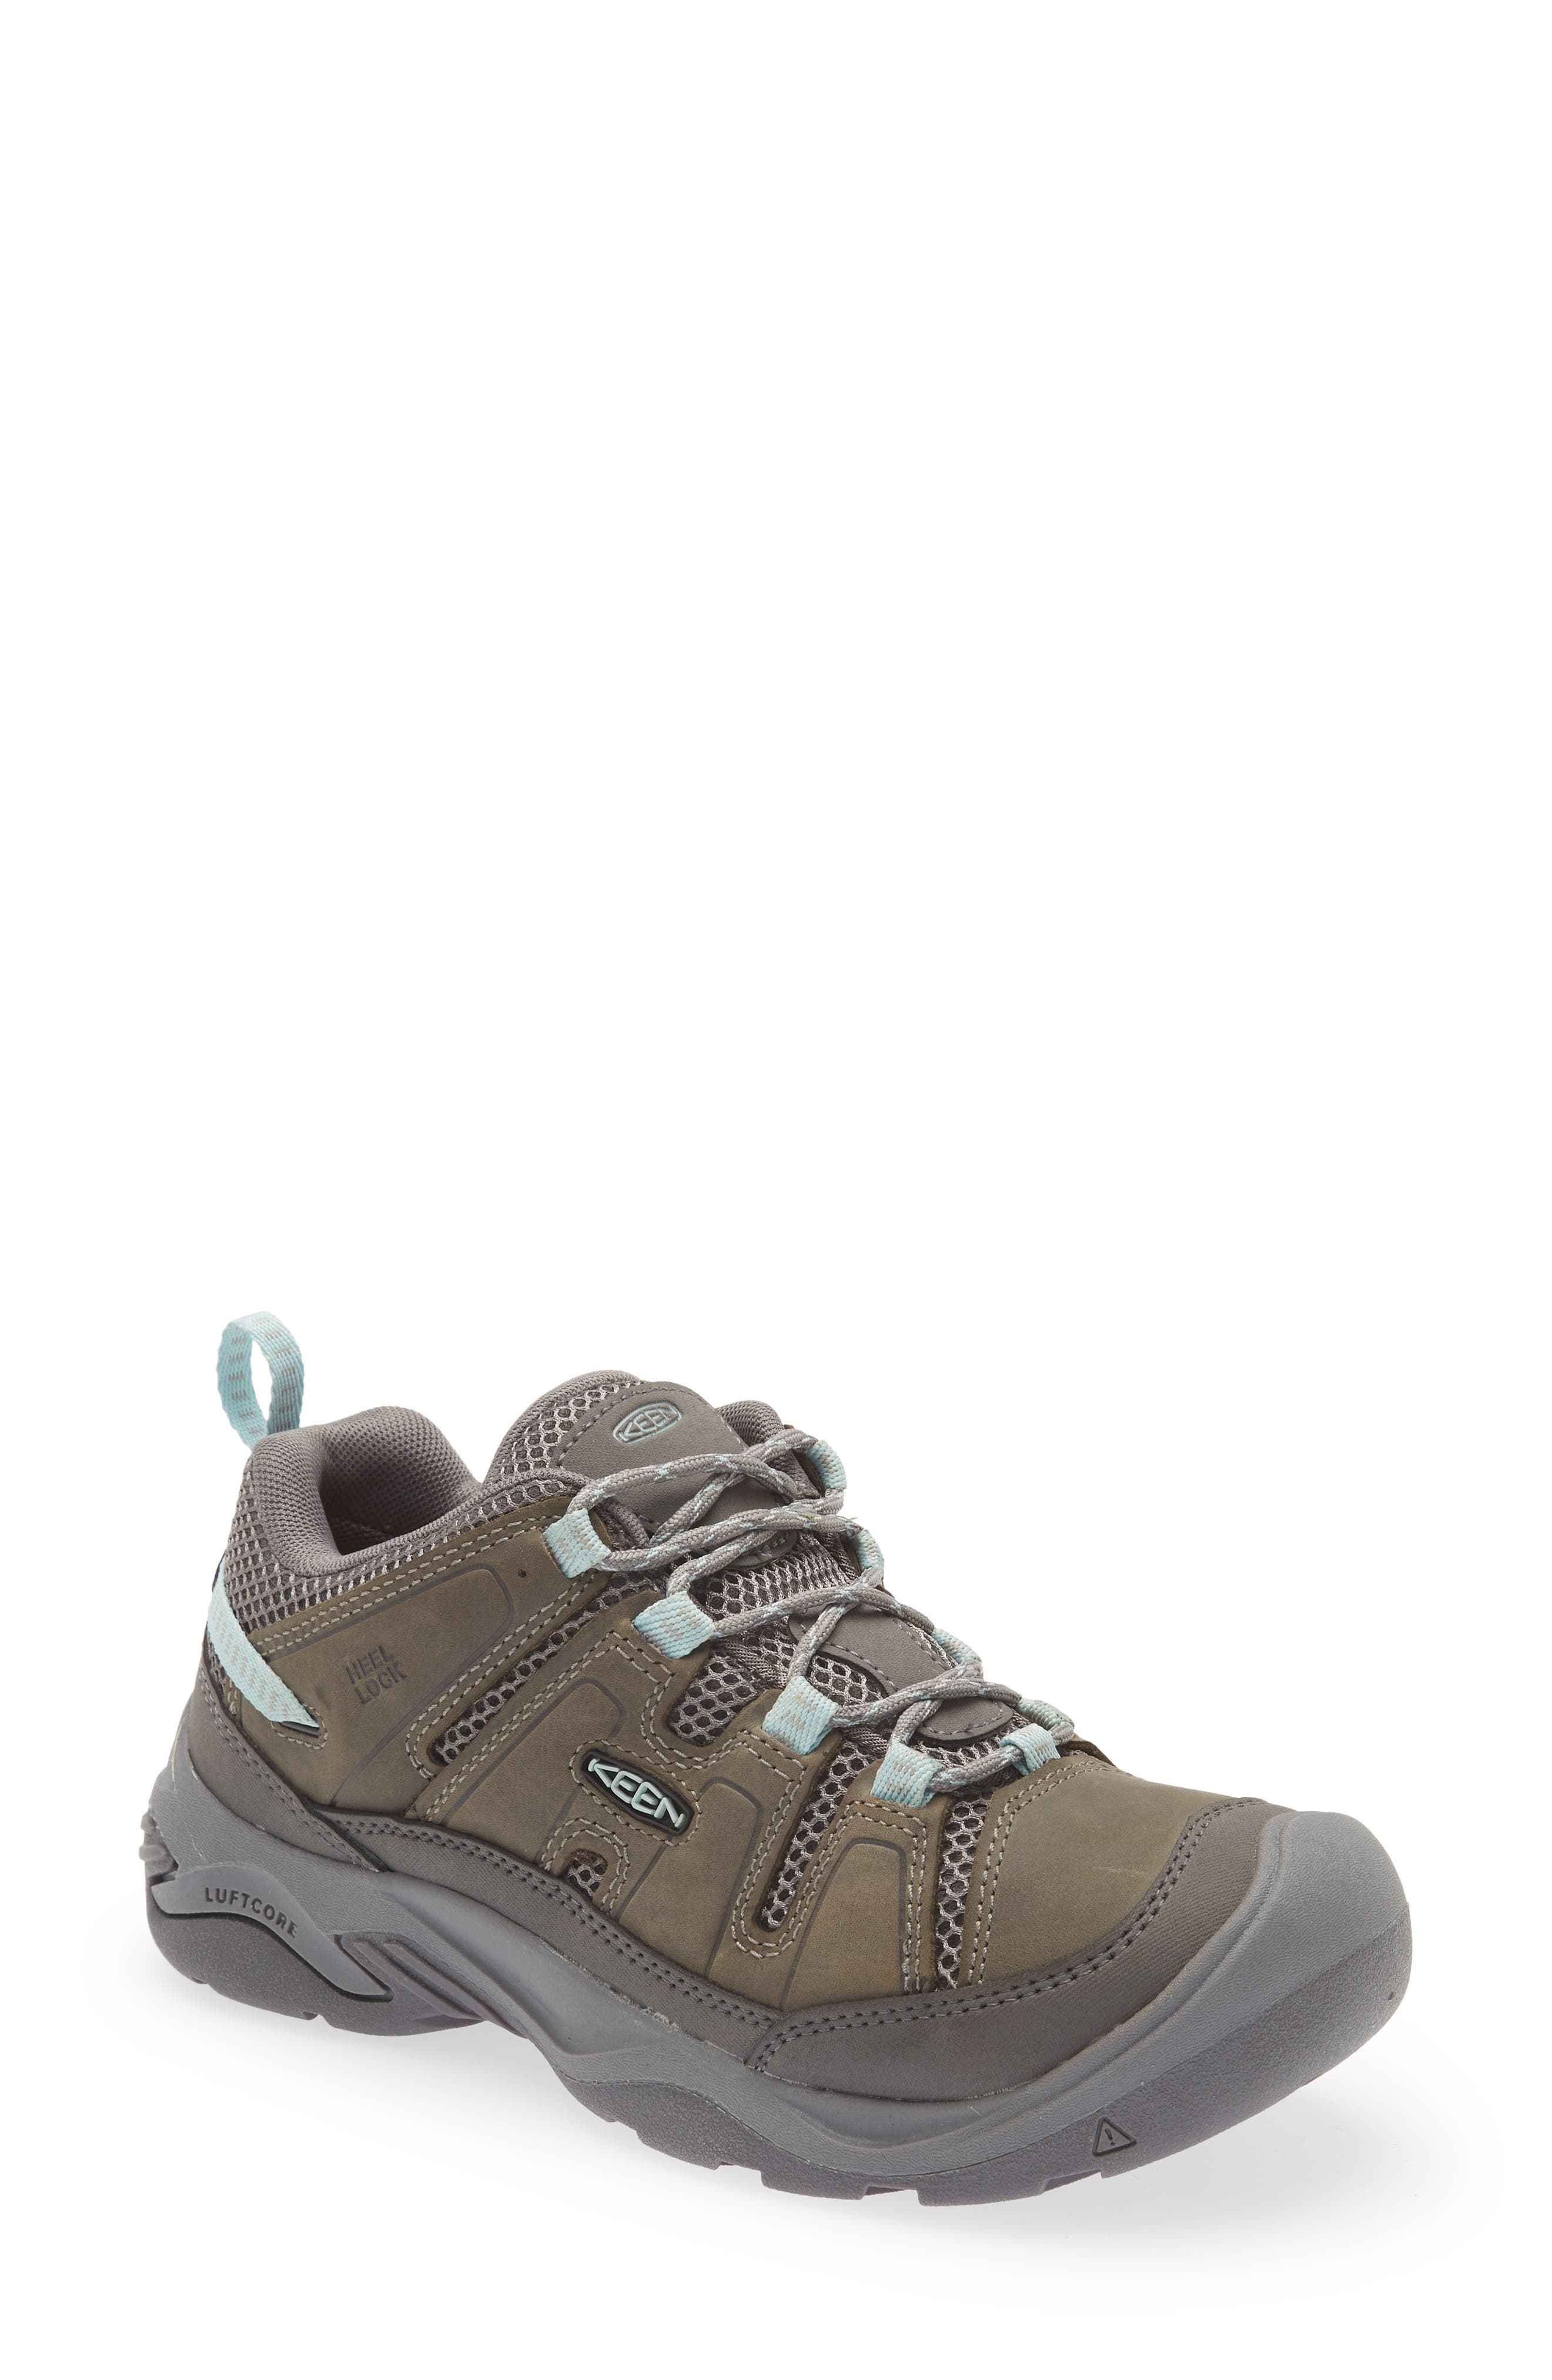 Mens Hiking Shoes Waterproof Northside Talus Low Trail Sneakers Brown NEW 